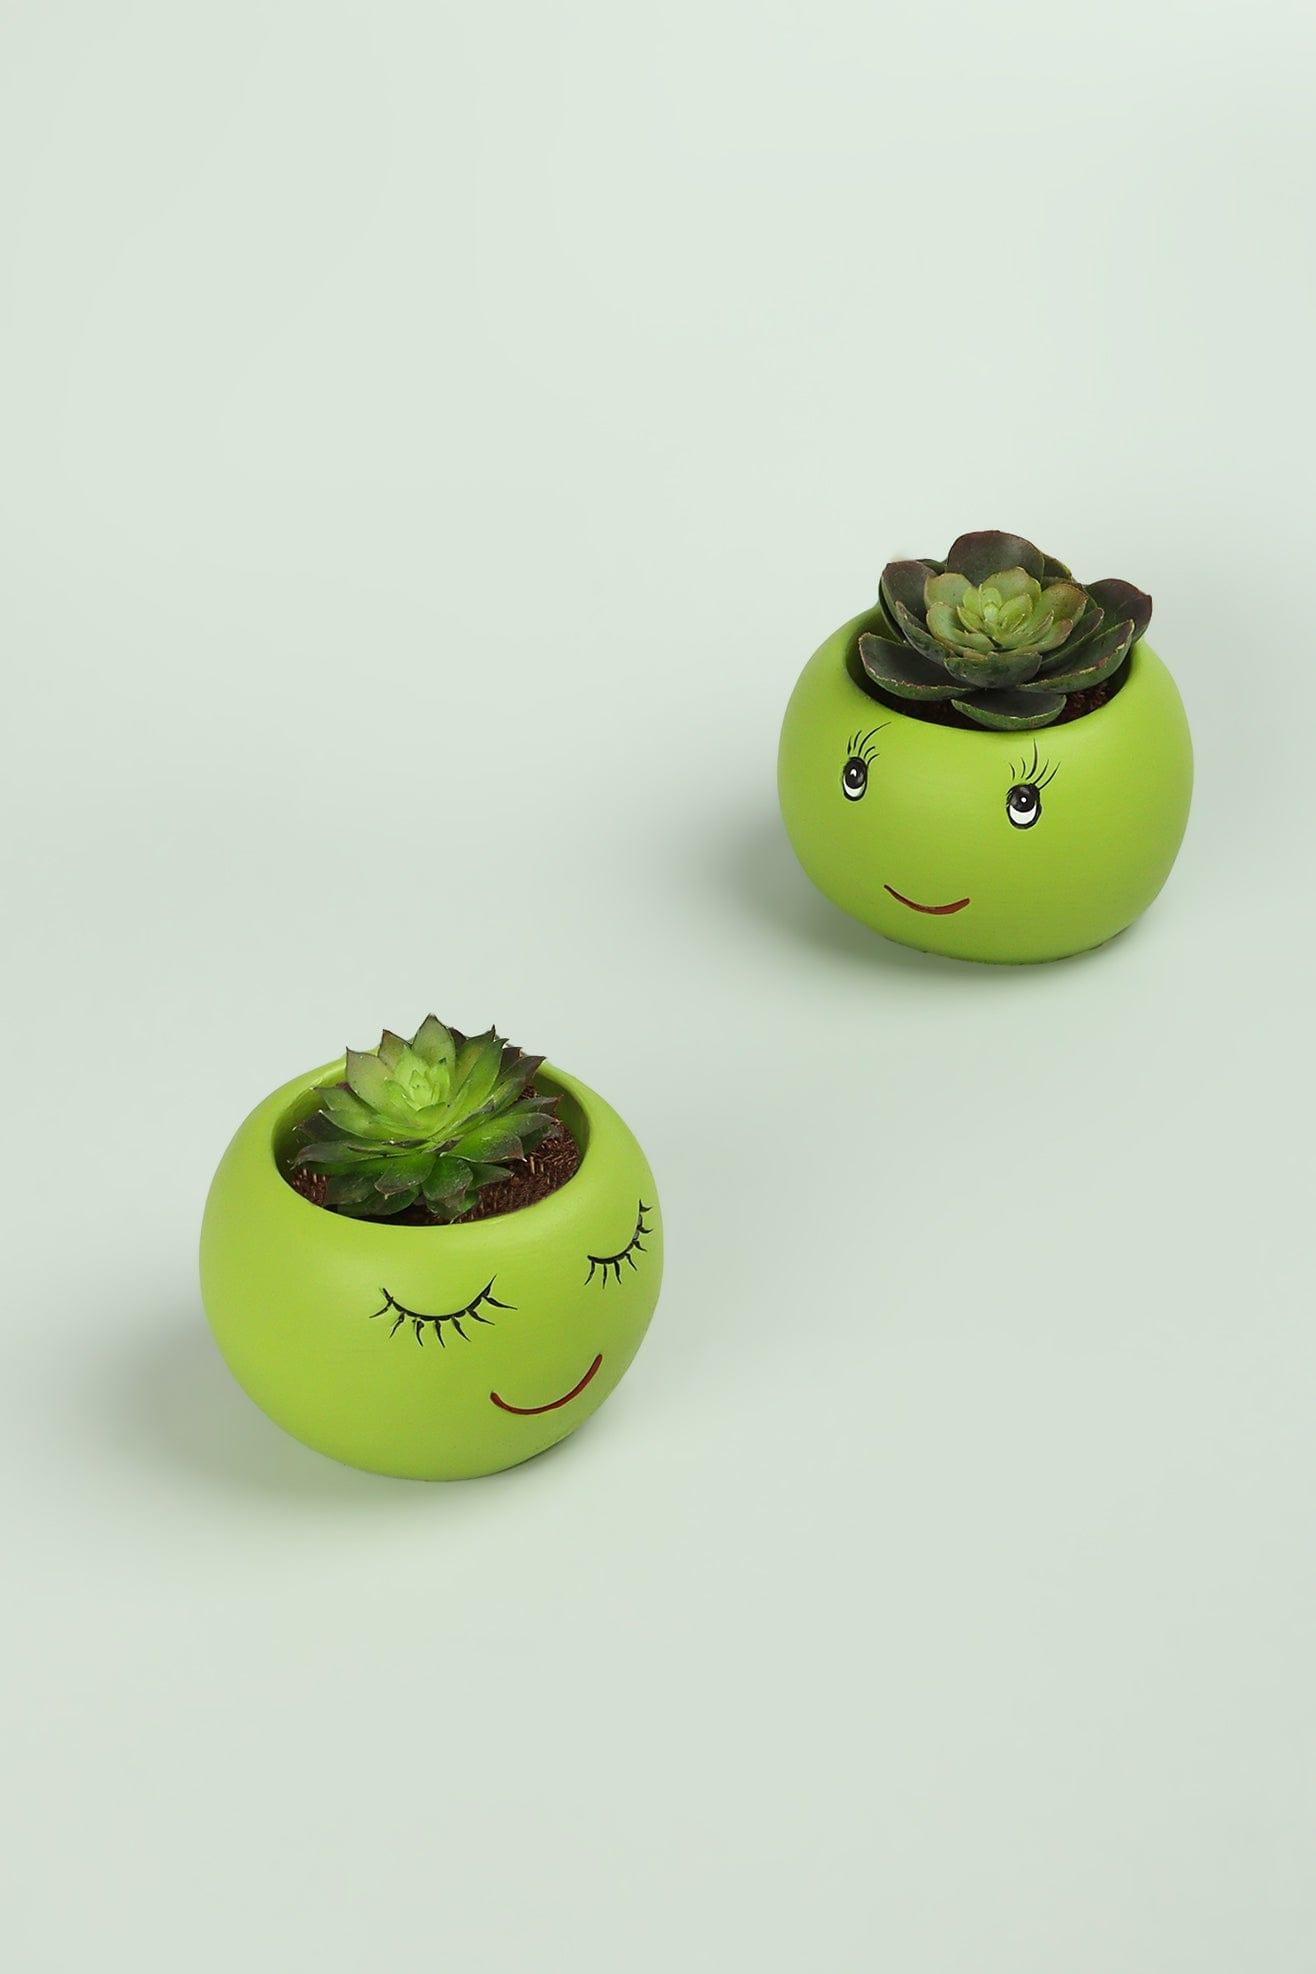 G Decor planter Green Smiling Pair Peas In The Pod Planter